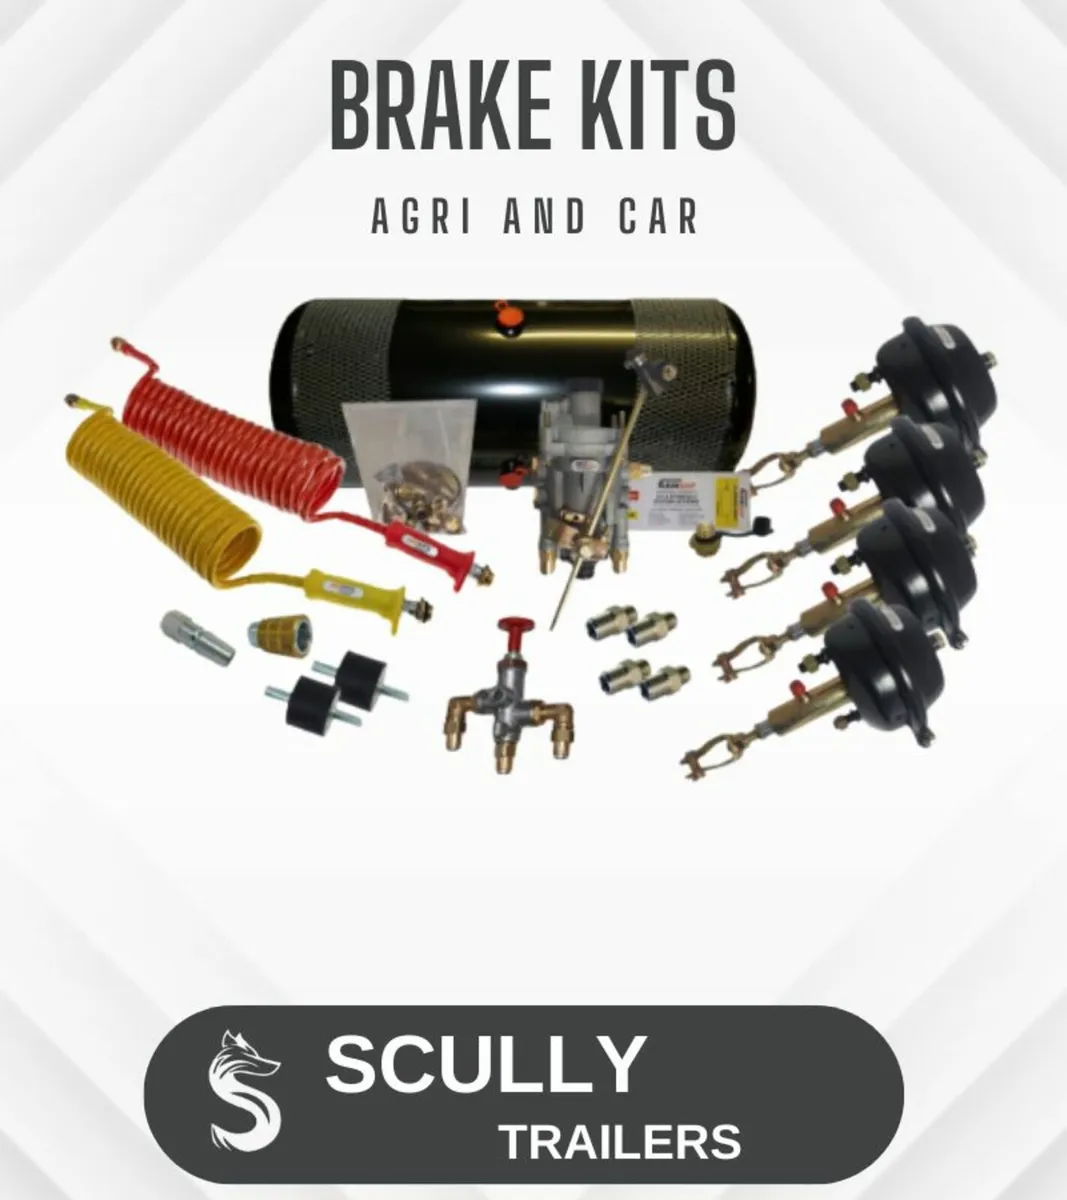 Tools | Parts | Consumables | kits | More - Image 1